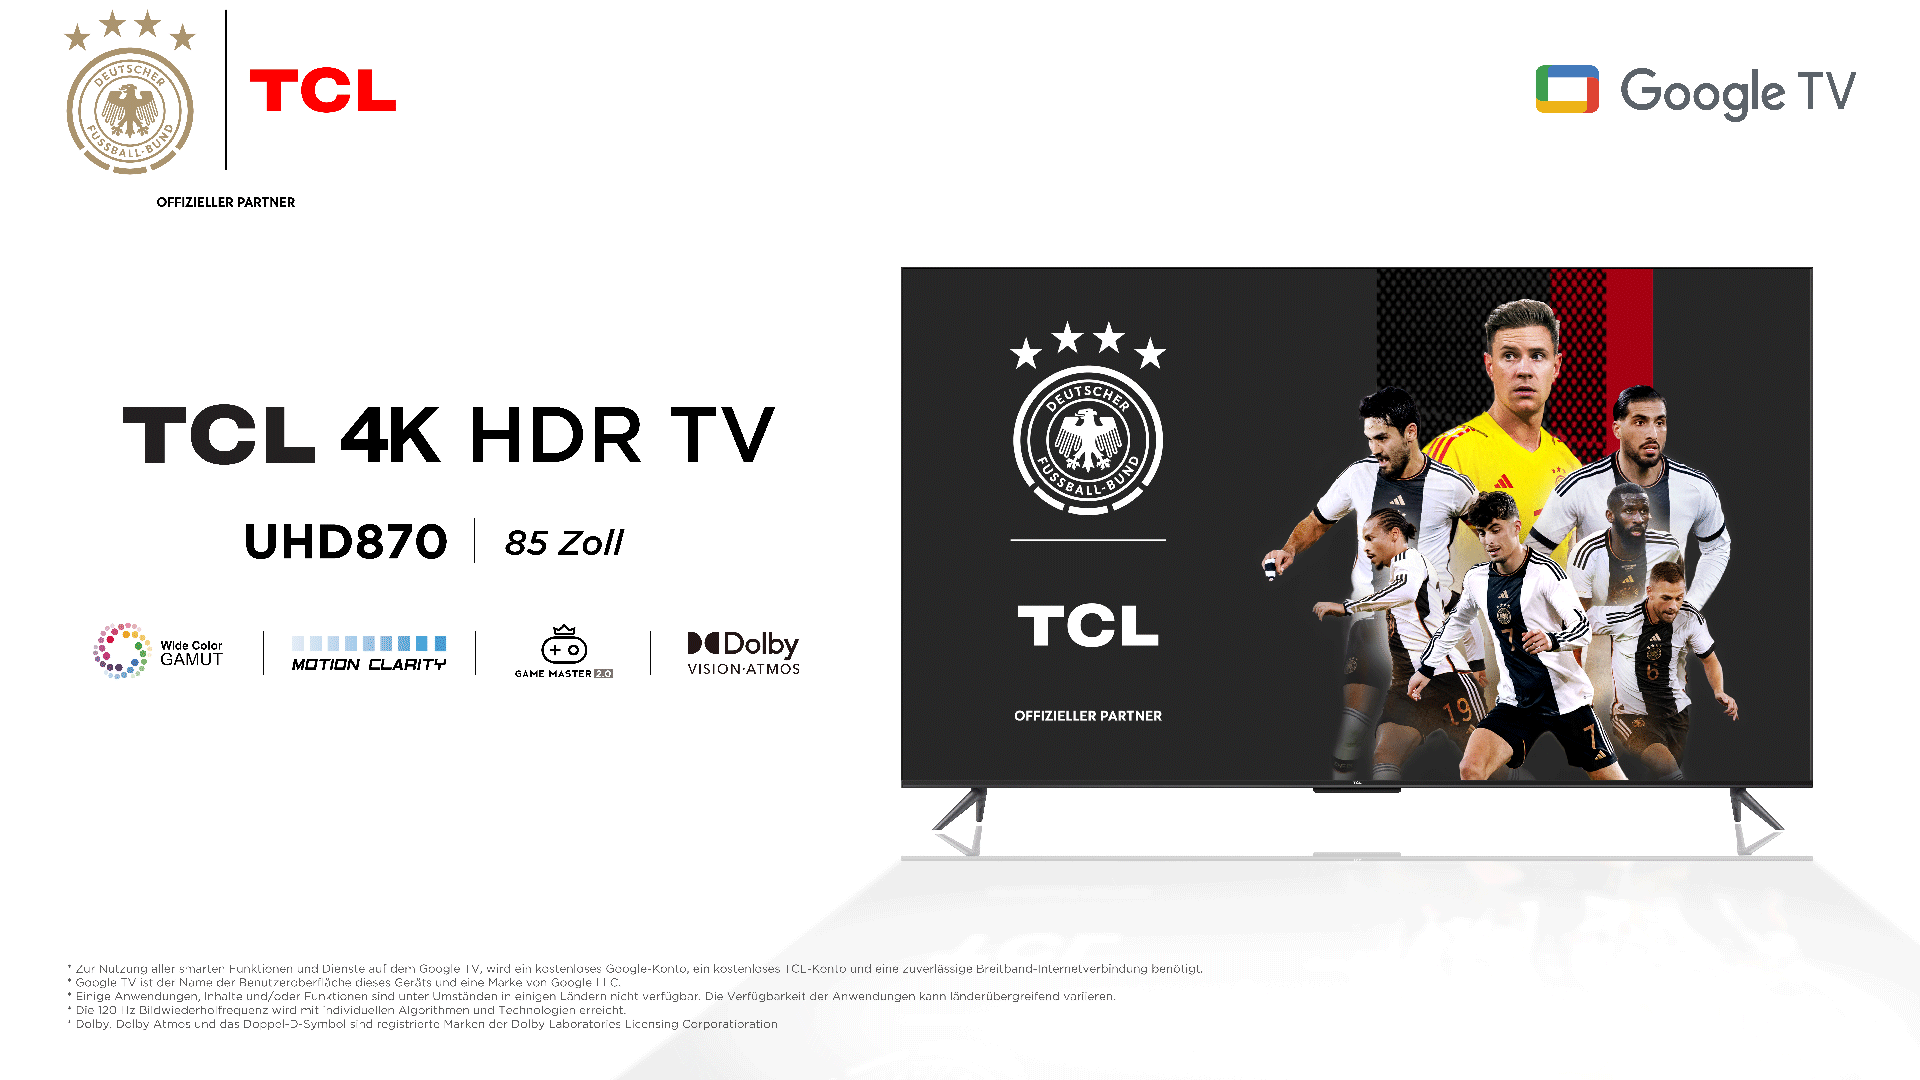 TCL P745 4K UHD TV